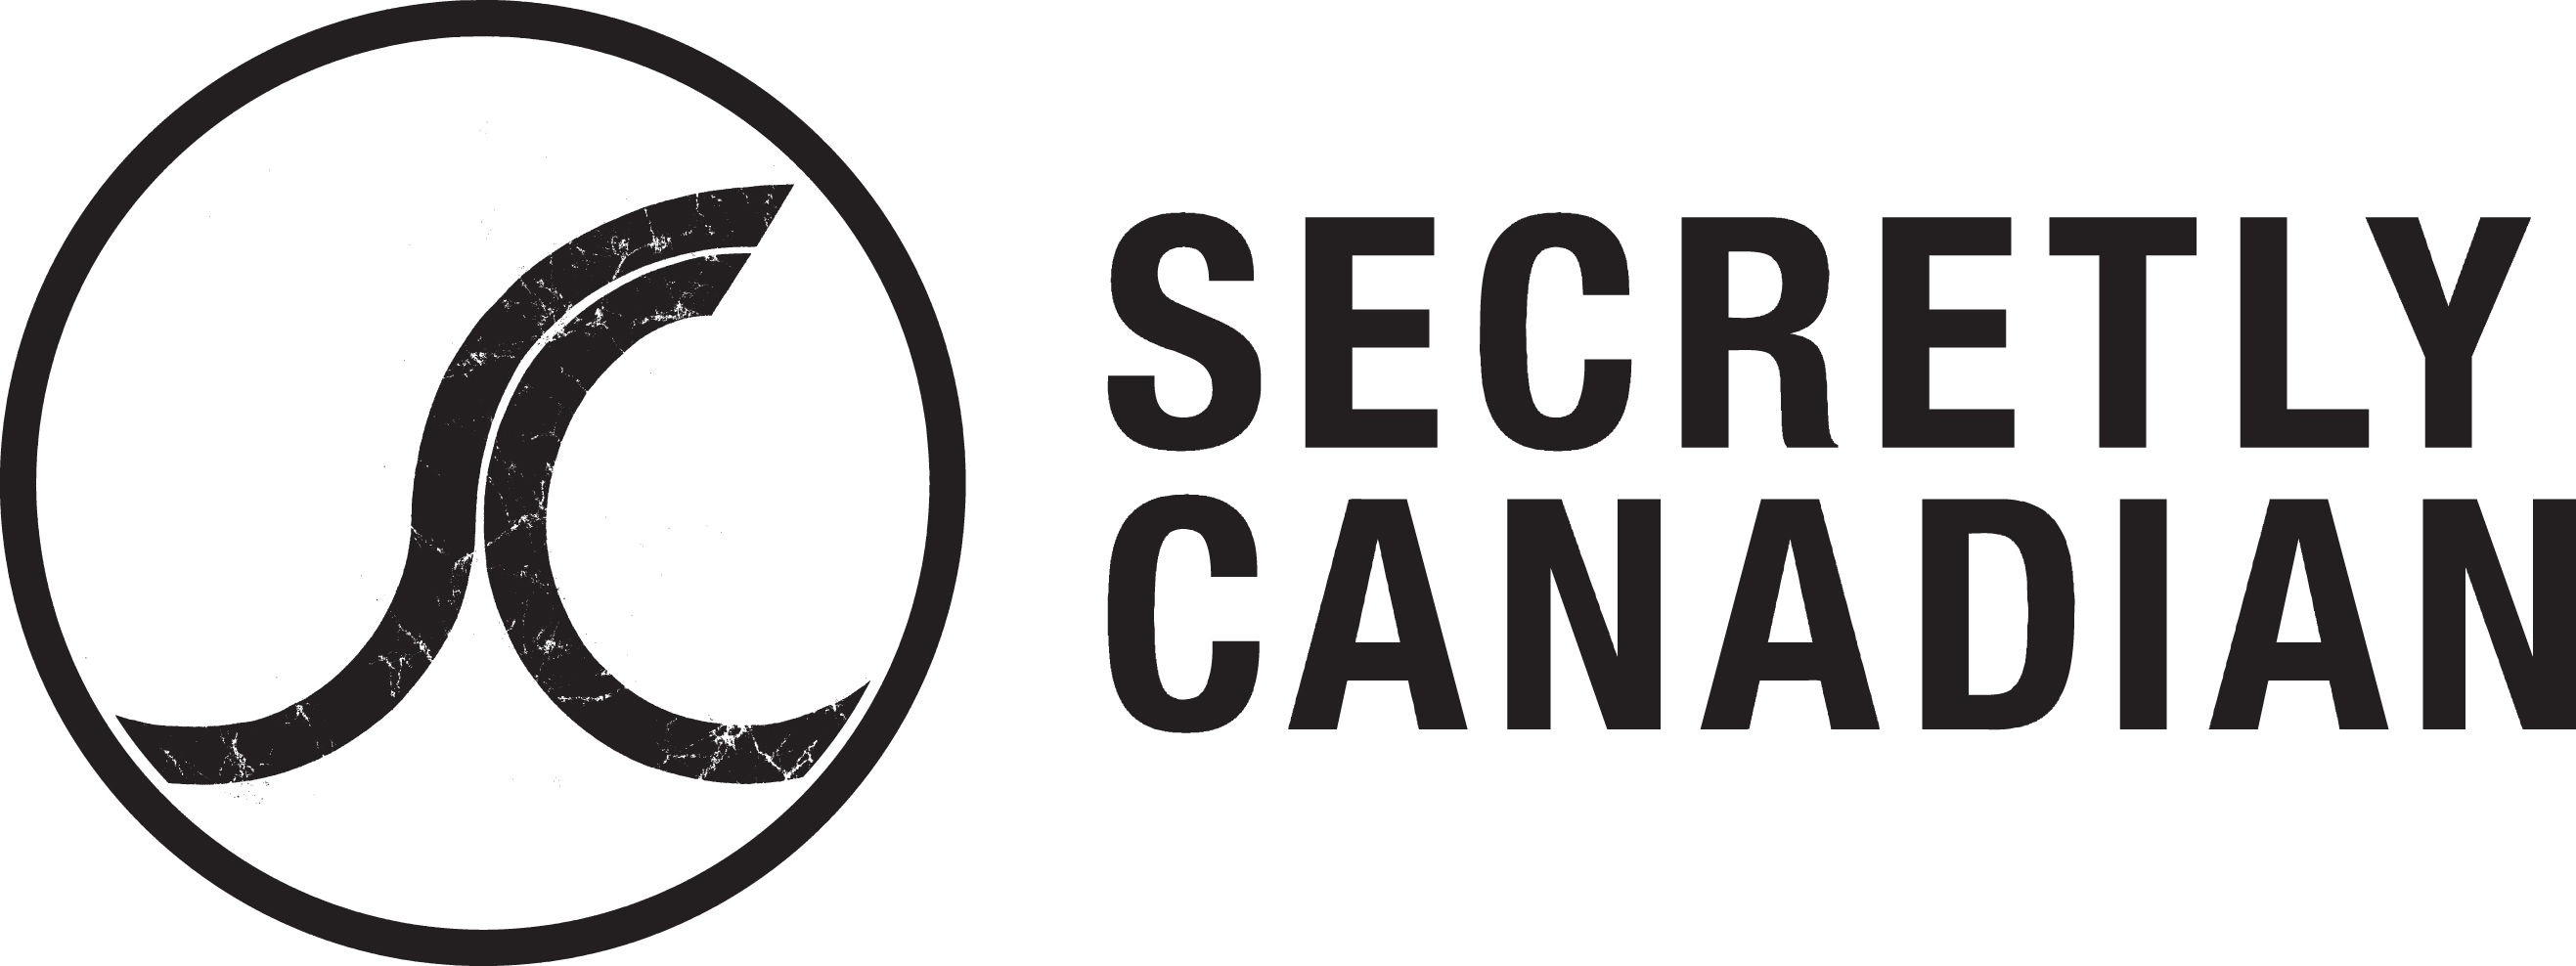 Secretly Canadian Logo